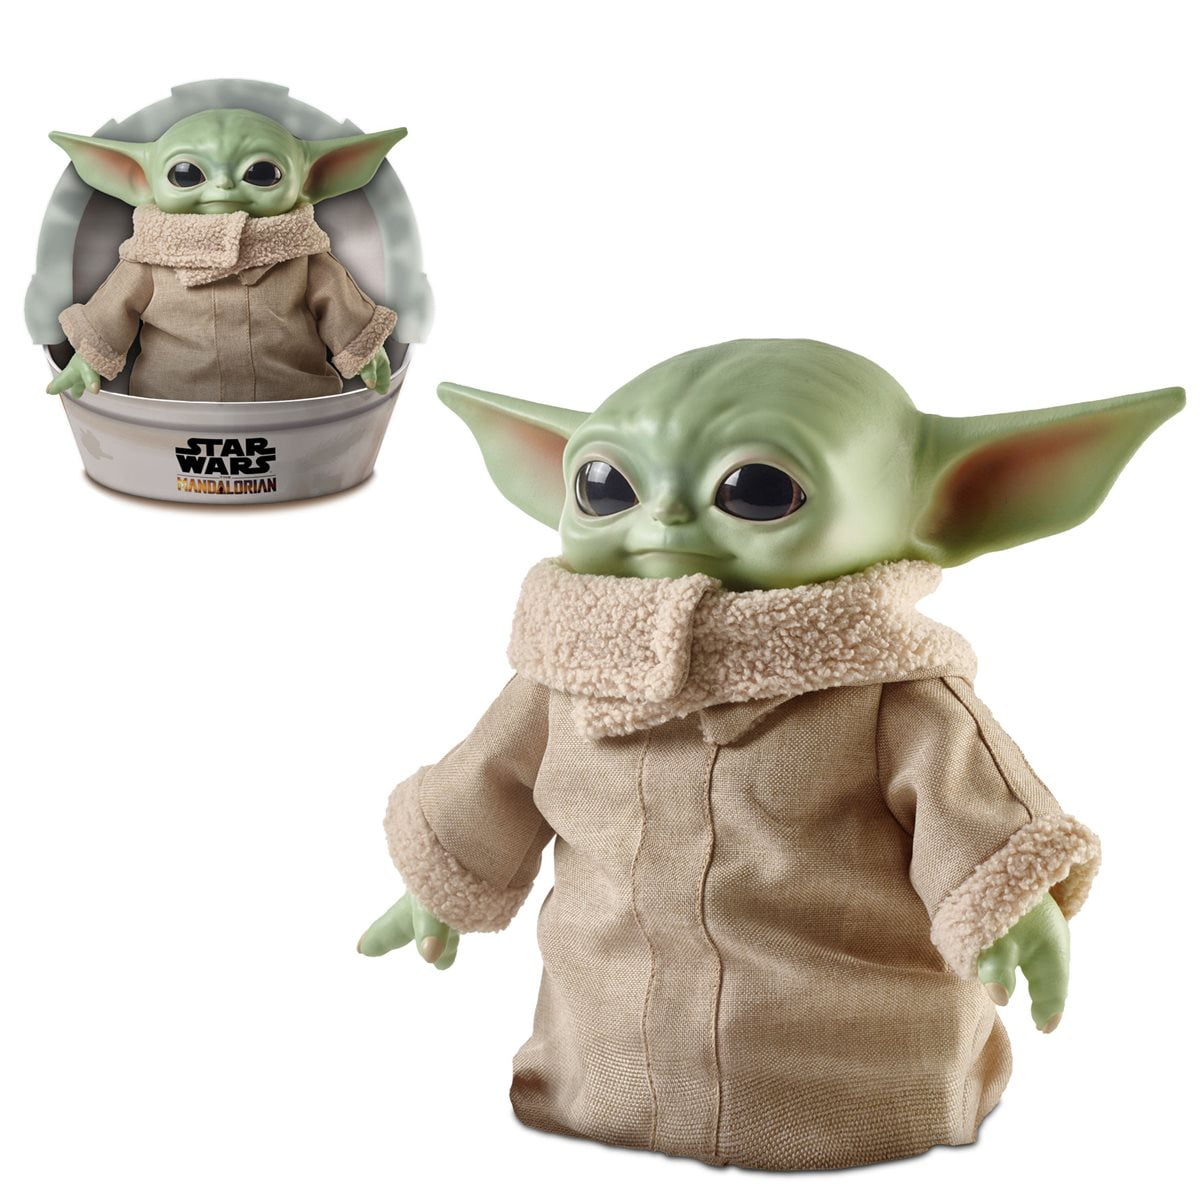 Disney Pixar Cars Star Wars The Child Plush Toy 11 Inch Small Yoda Like Soft The 